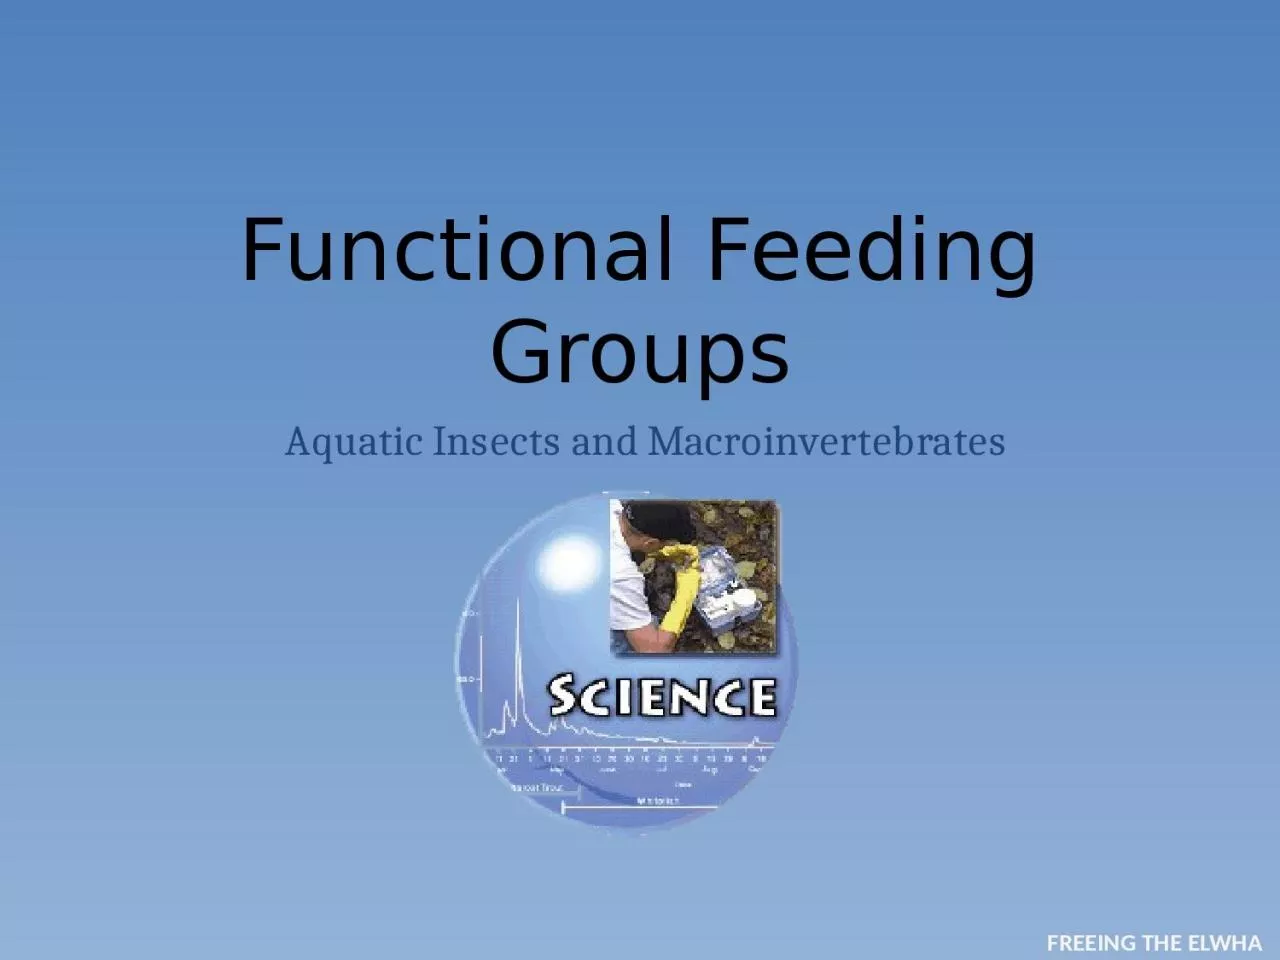 Functional Feeding Groups